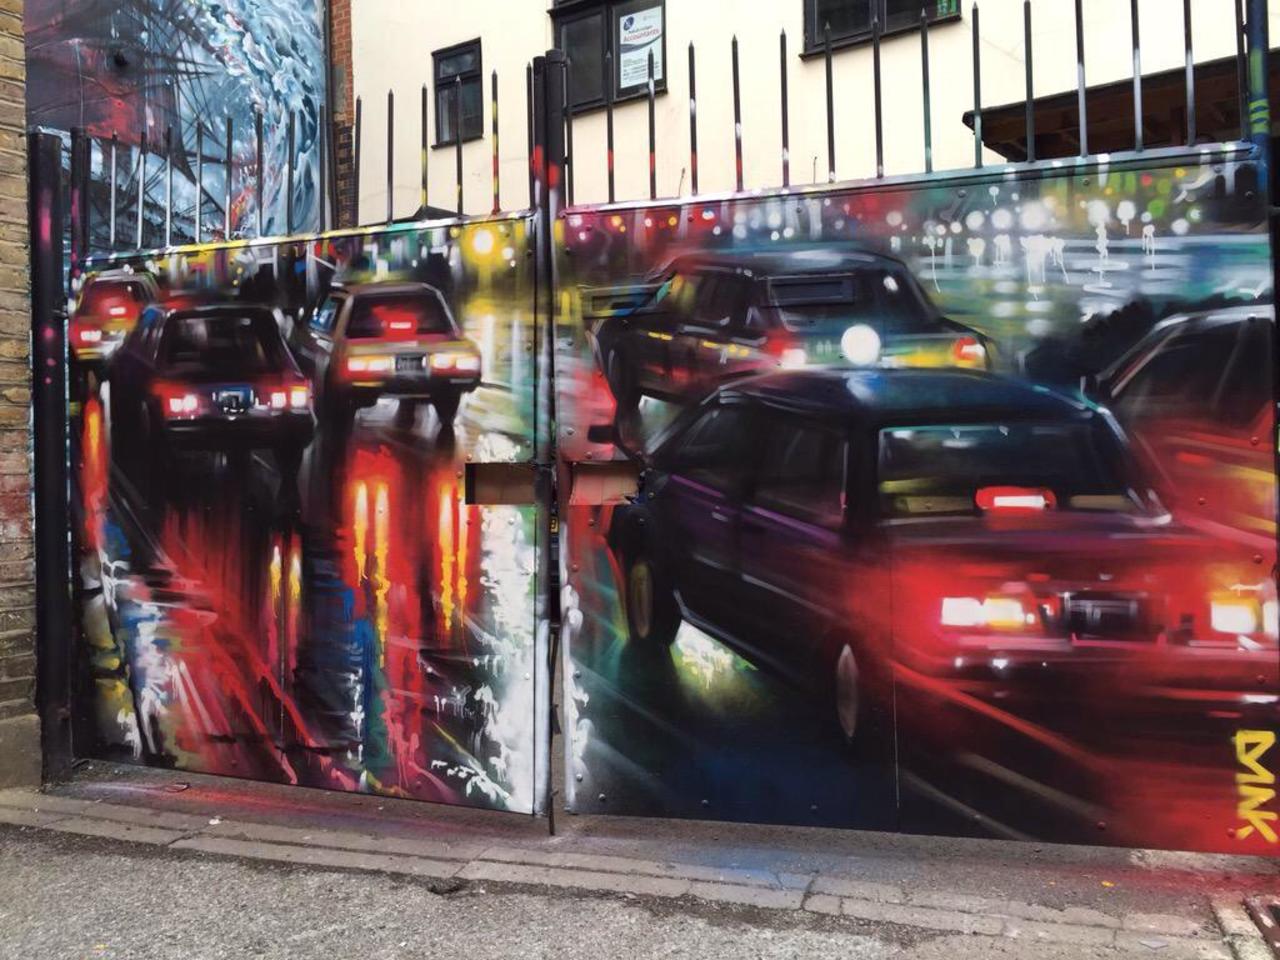 New Street Art by DanKitchener in Brick Lane London 

#art #graffiti #mural #streetart http://t.co/kqGTXUJee5